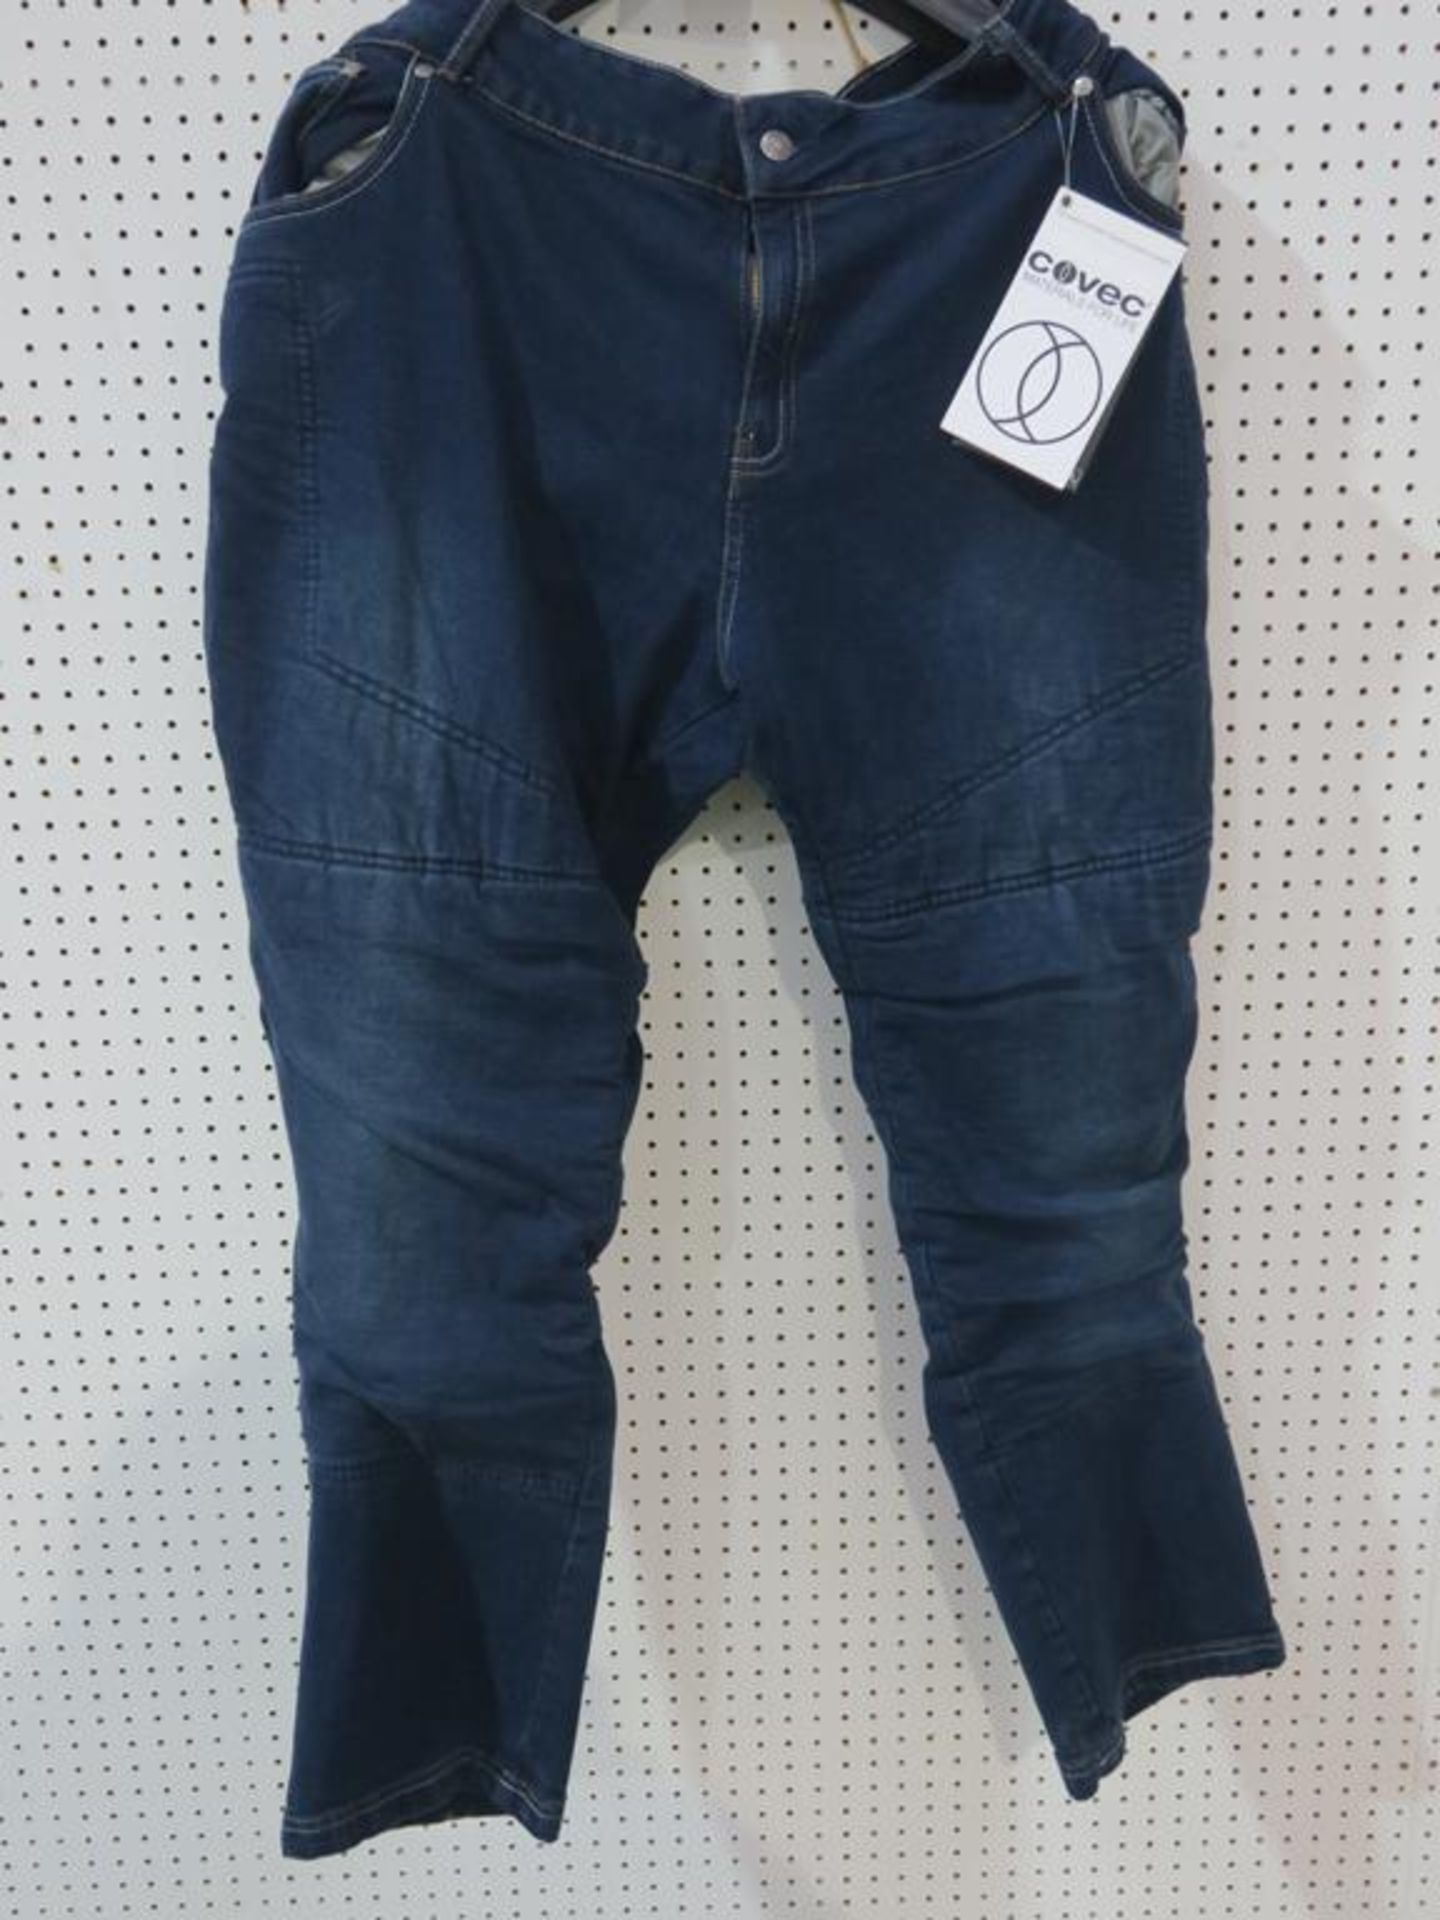 * Bull-It Jeans Ladies Flex SR4 Blue size 22S 112104012922 (RRP £109)